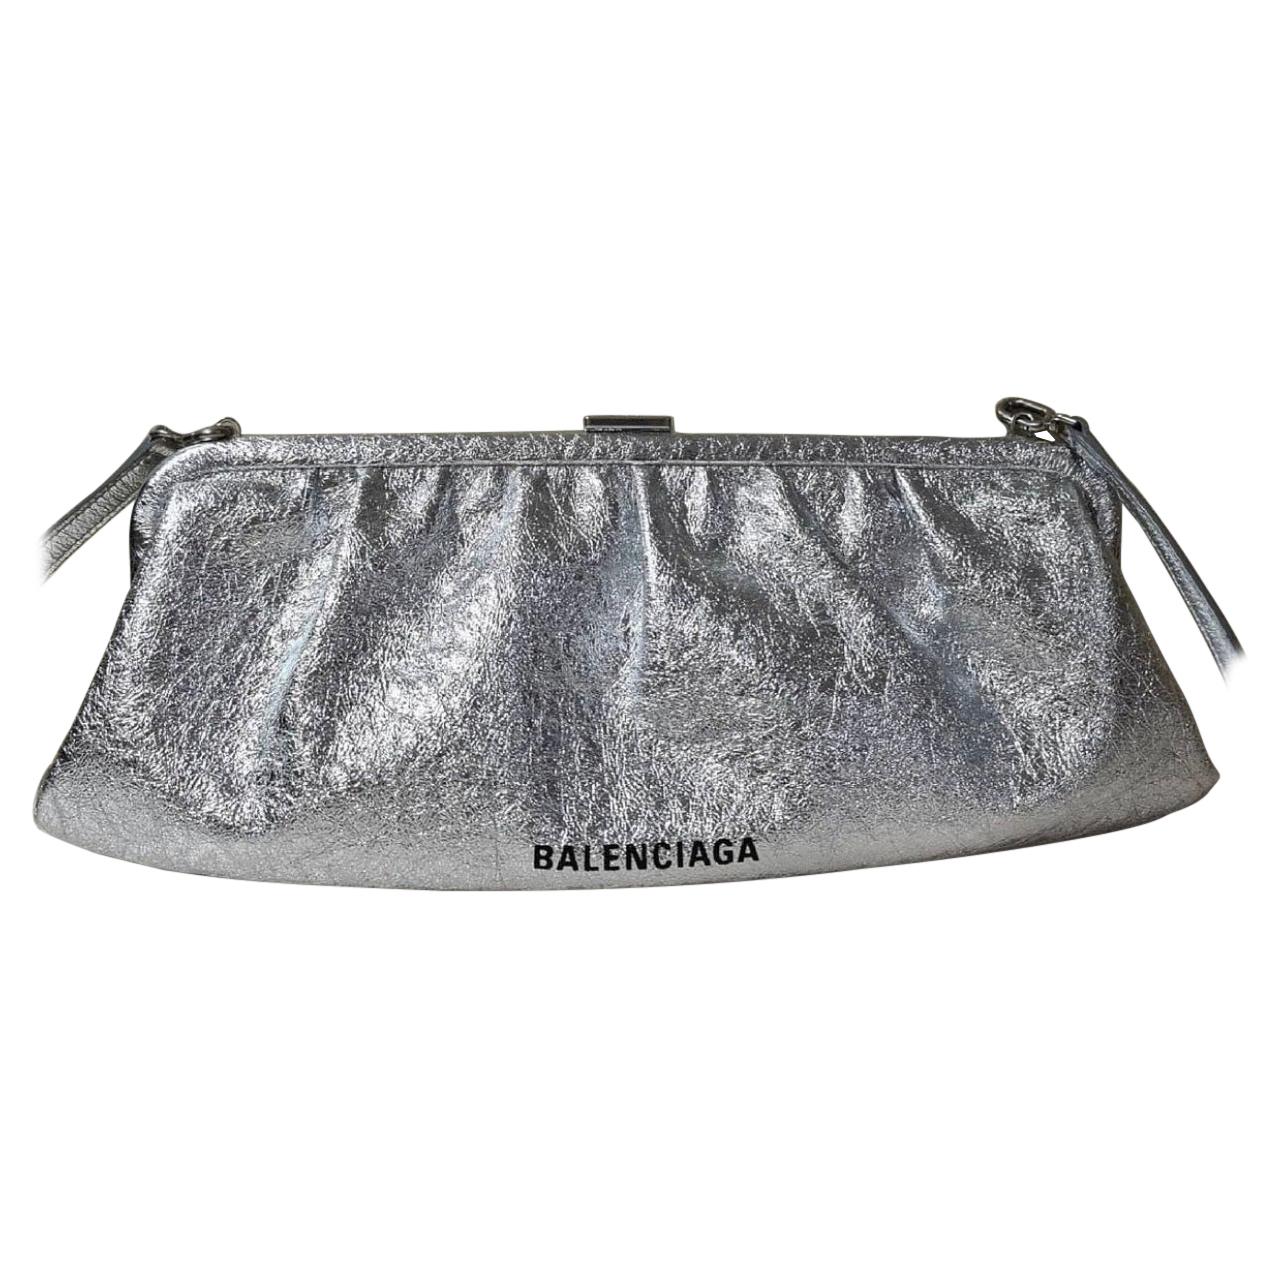 Balenciaga Cloud Crackled Metallic Leather Cross-Body Bag